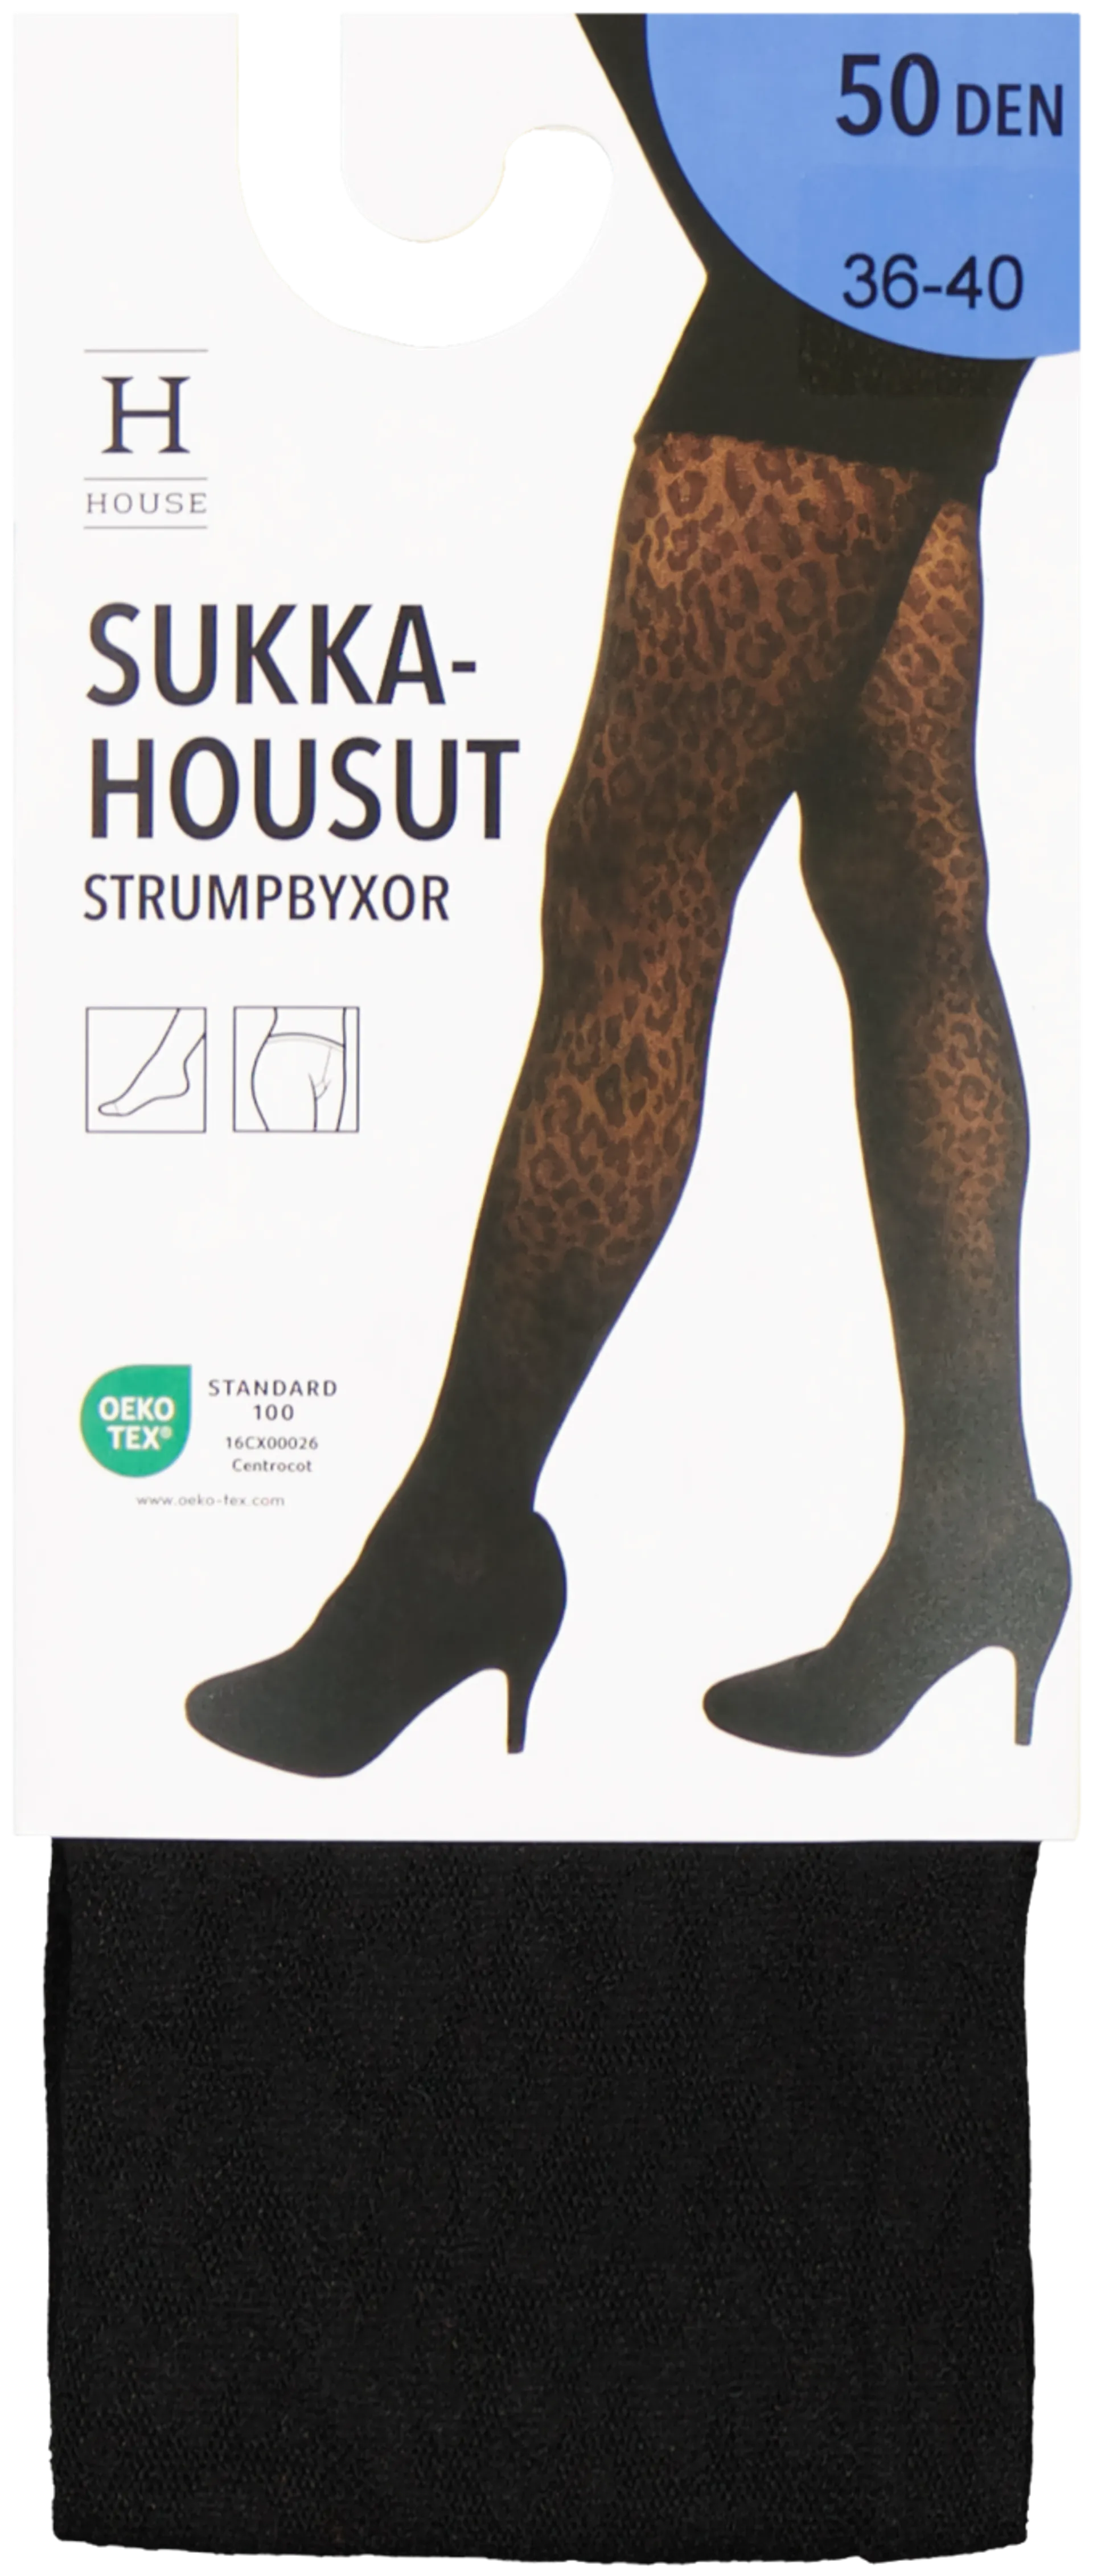 House naisten sukkahousut 50 denier 22AU23060 - BLACK - 1